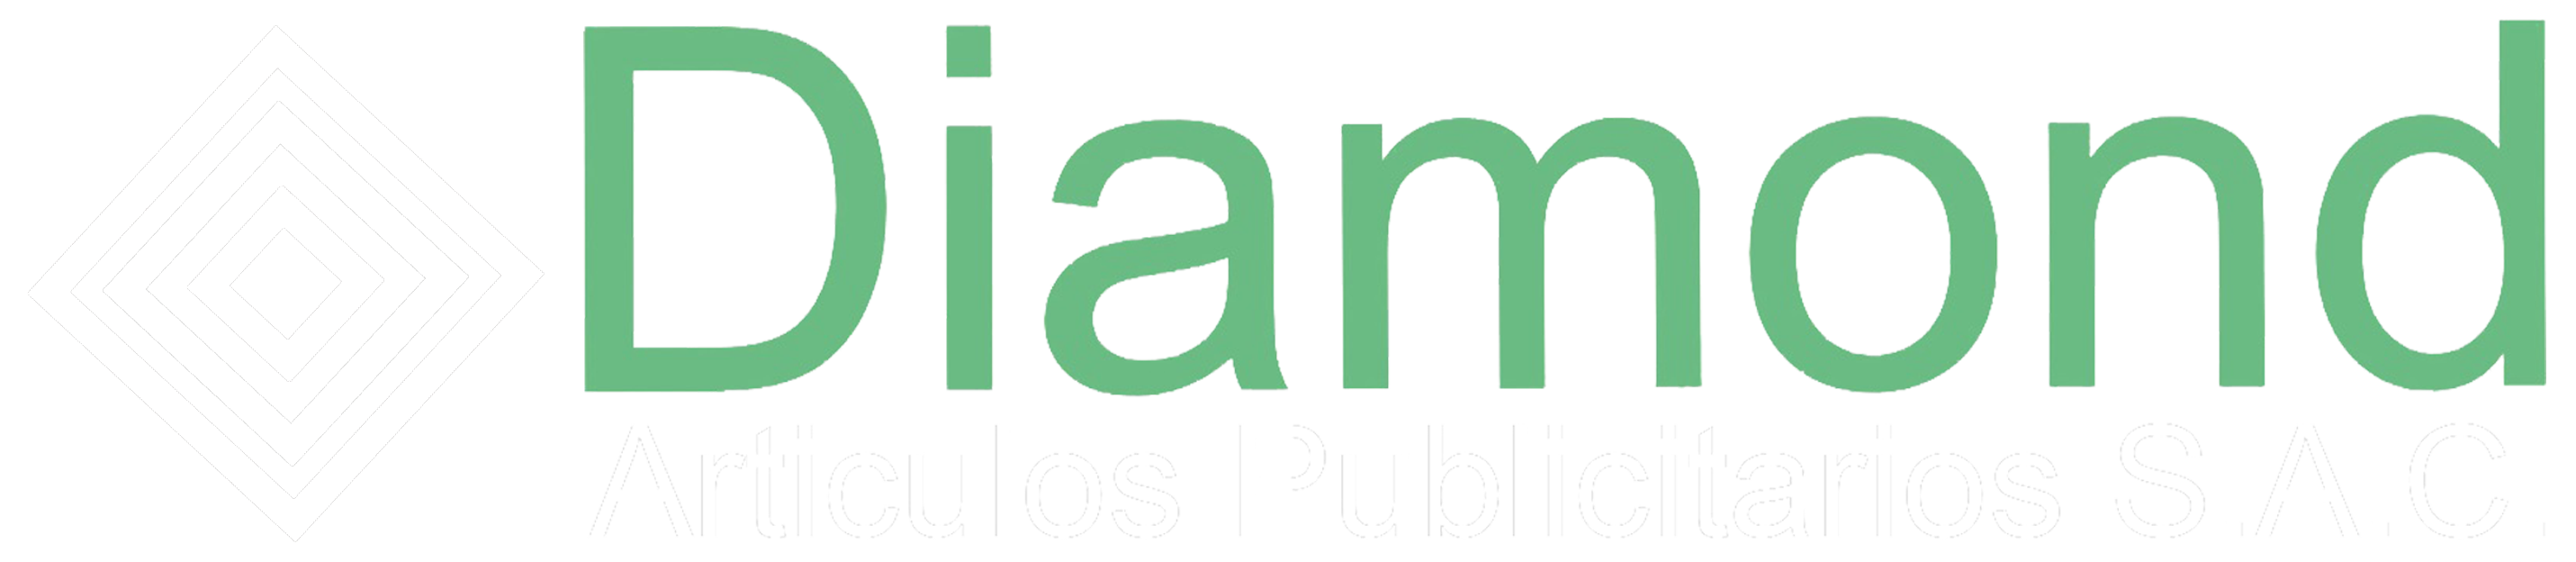 Diamond Articulos Publicitarios S.A.C. logo